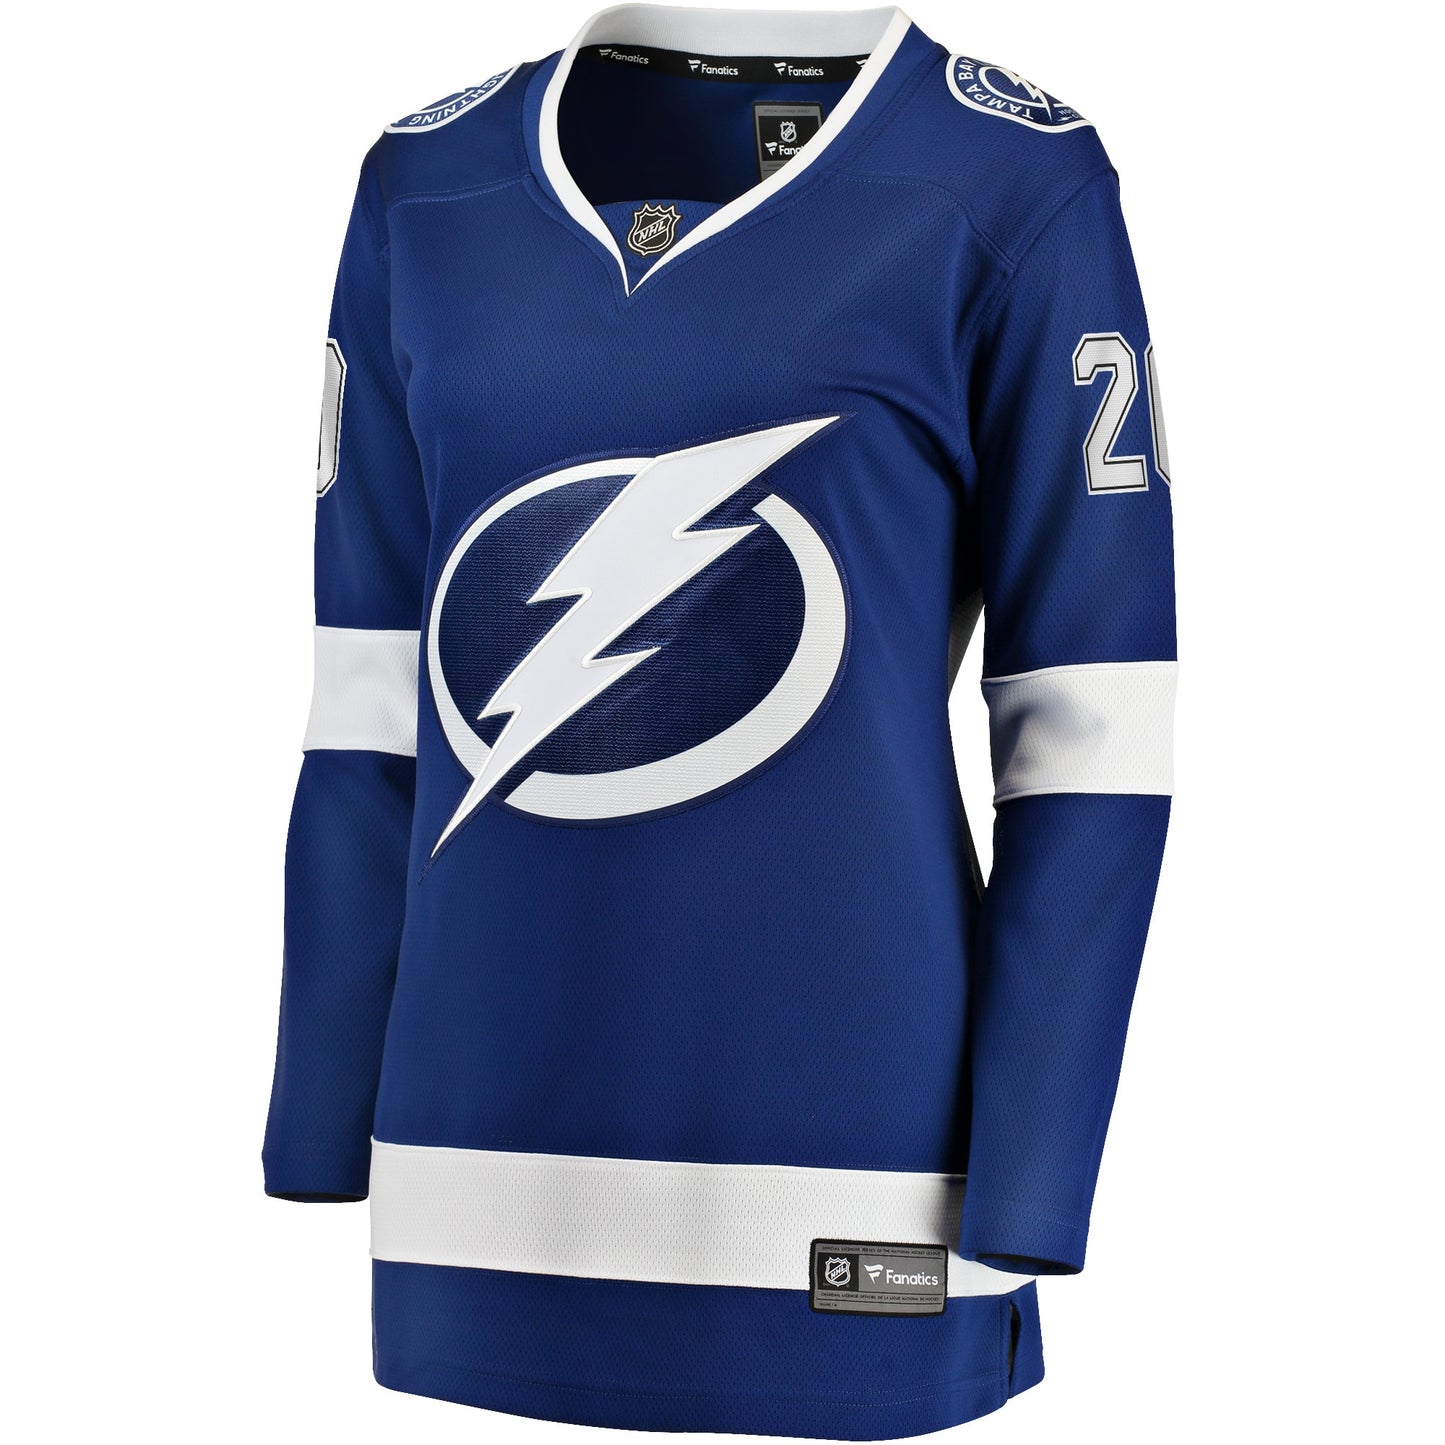 Nicholas Paul Tampa Bay Lightning Fanatics Branded Women's Home Breakaway Player Jersey - Blue